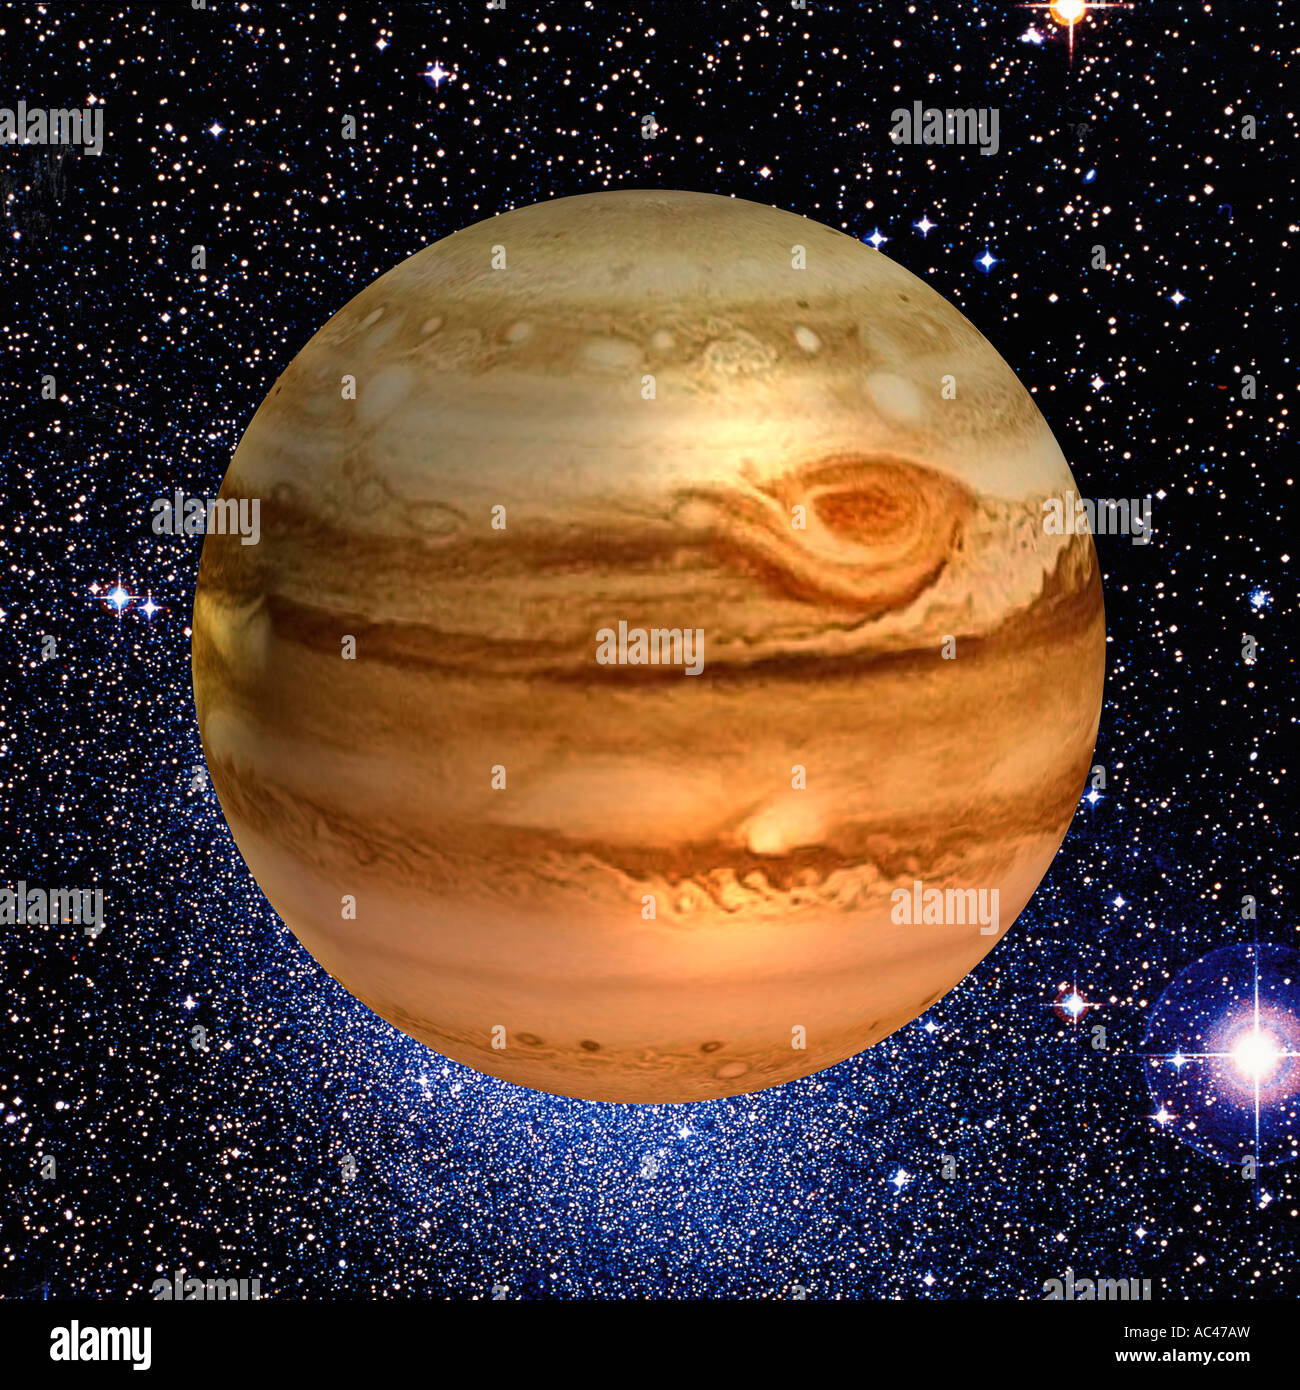 Planet Jupiter Compositing am Nachthimmel von Sternen aus dem Hubble Space Telescope Stockfoto